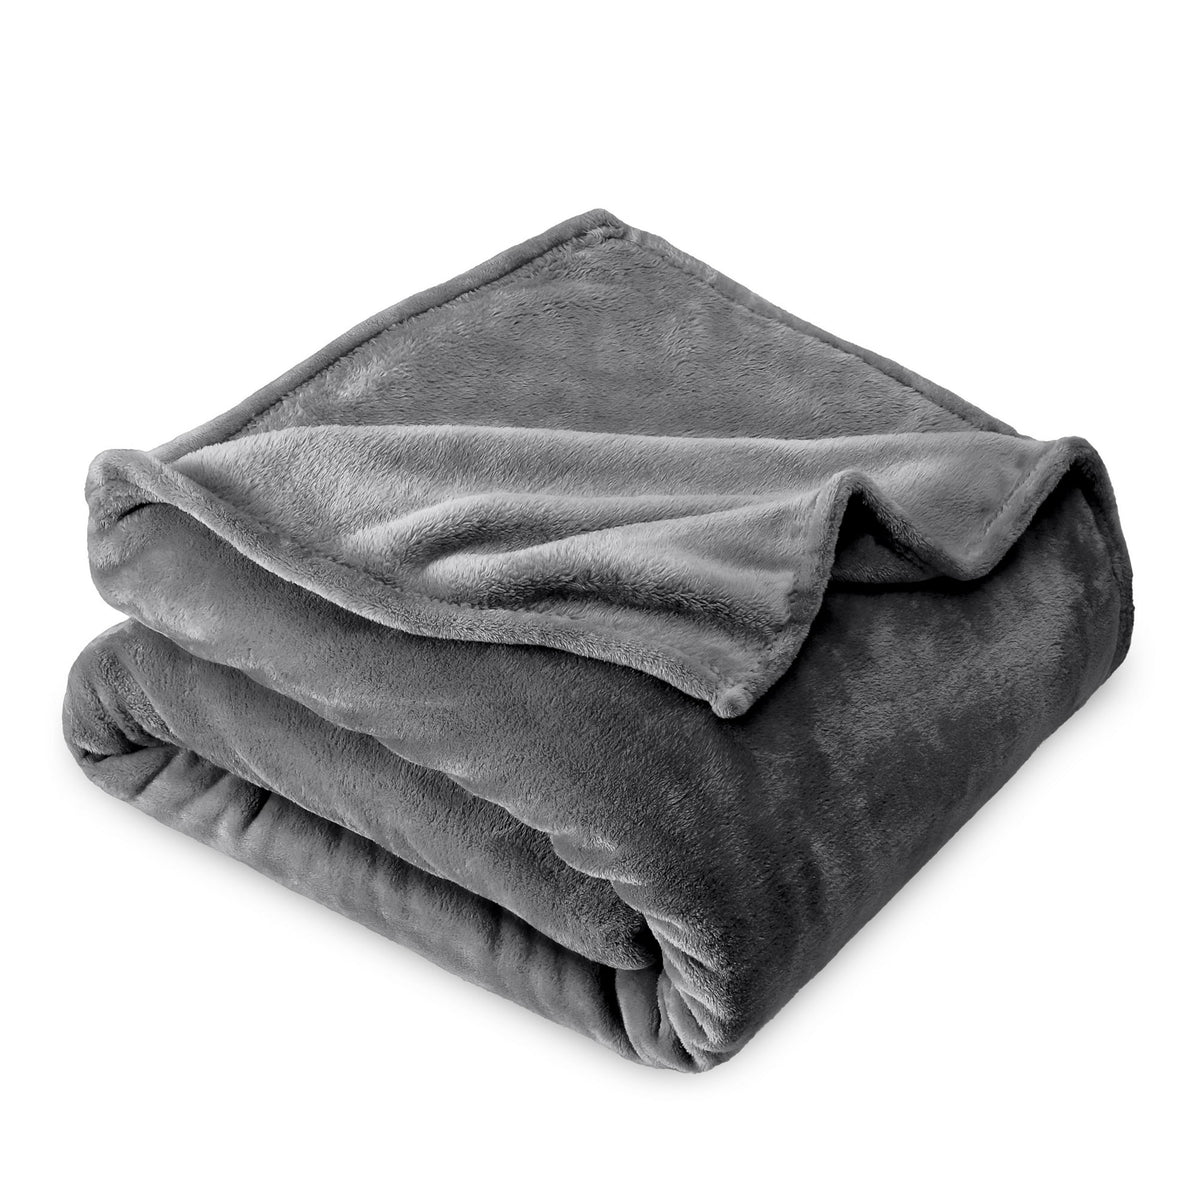 Micro plush Fleece Blanket - Soft & Cozy Full/Queen Size Gray Blanket